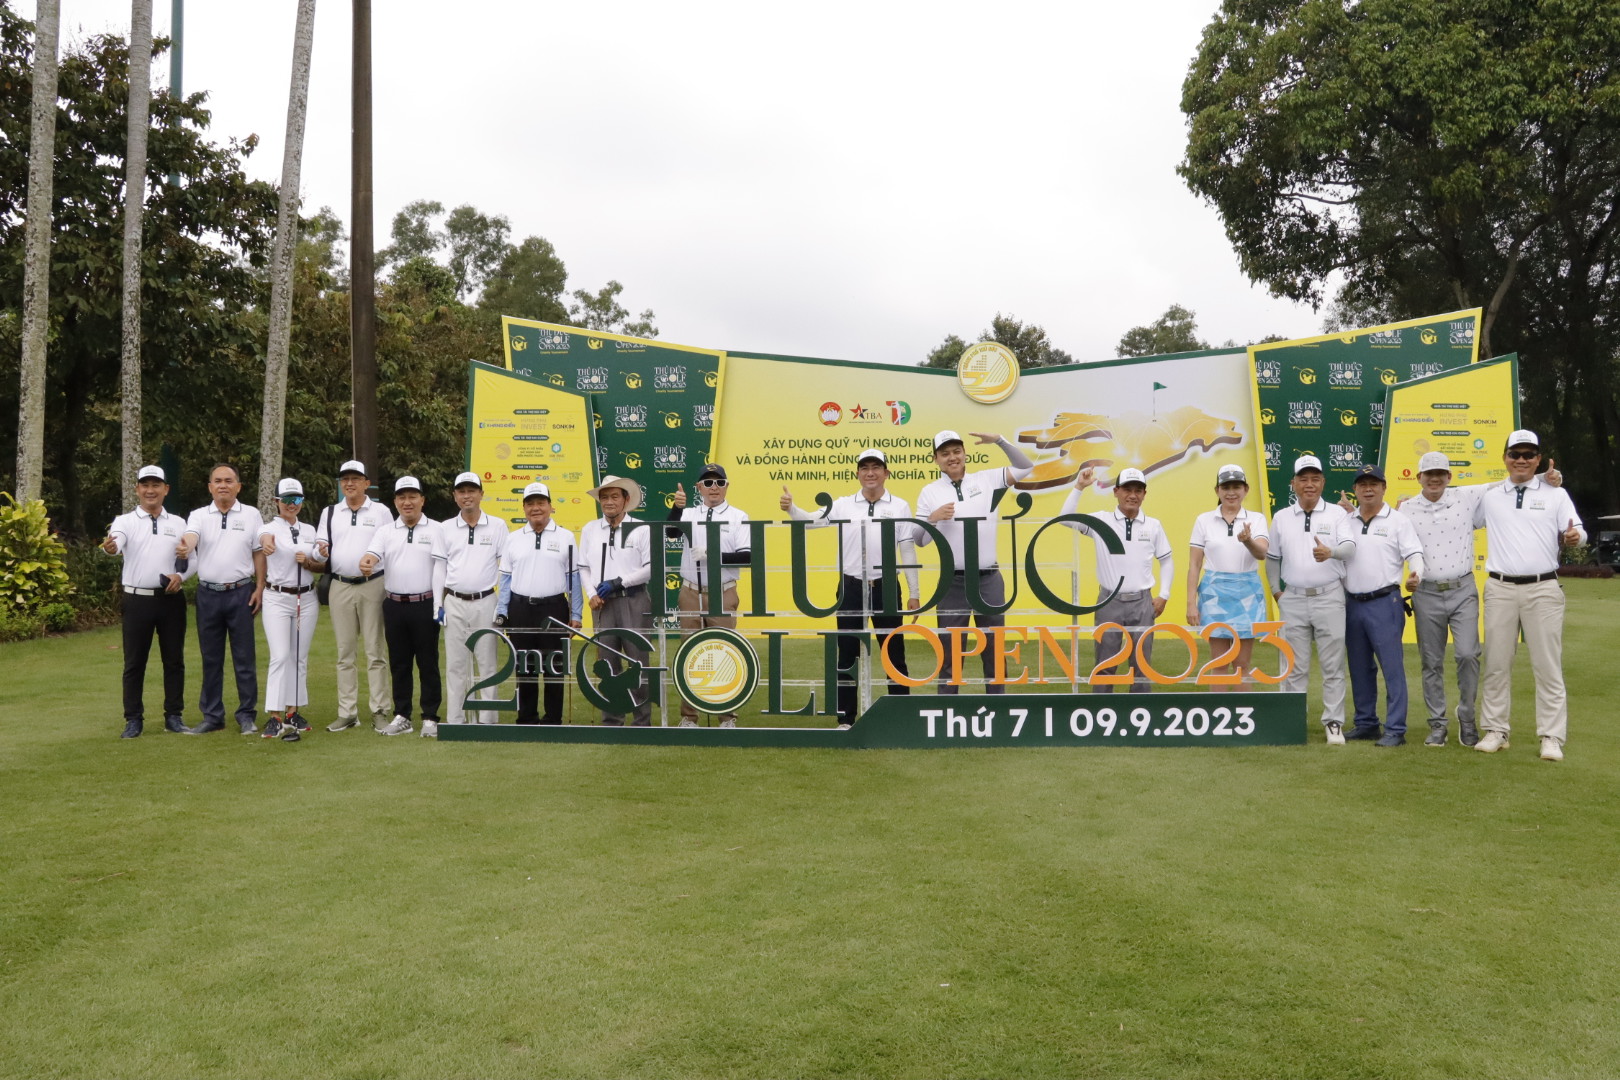 Mai House Saigon Hotel accompanied Thu Duc Open Golf Tournament 2023